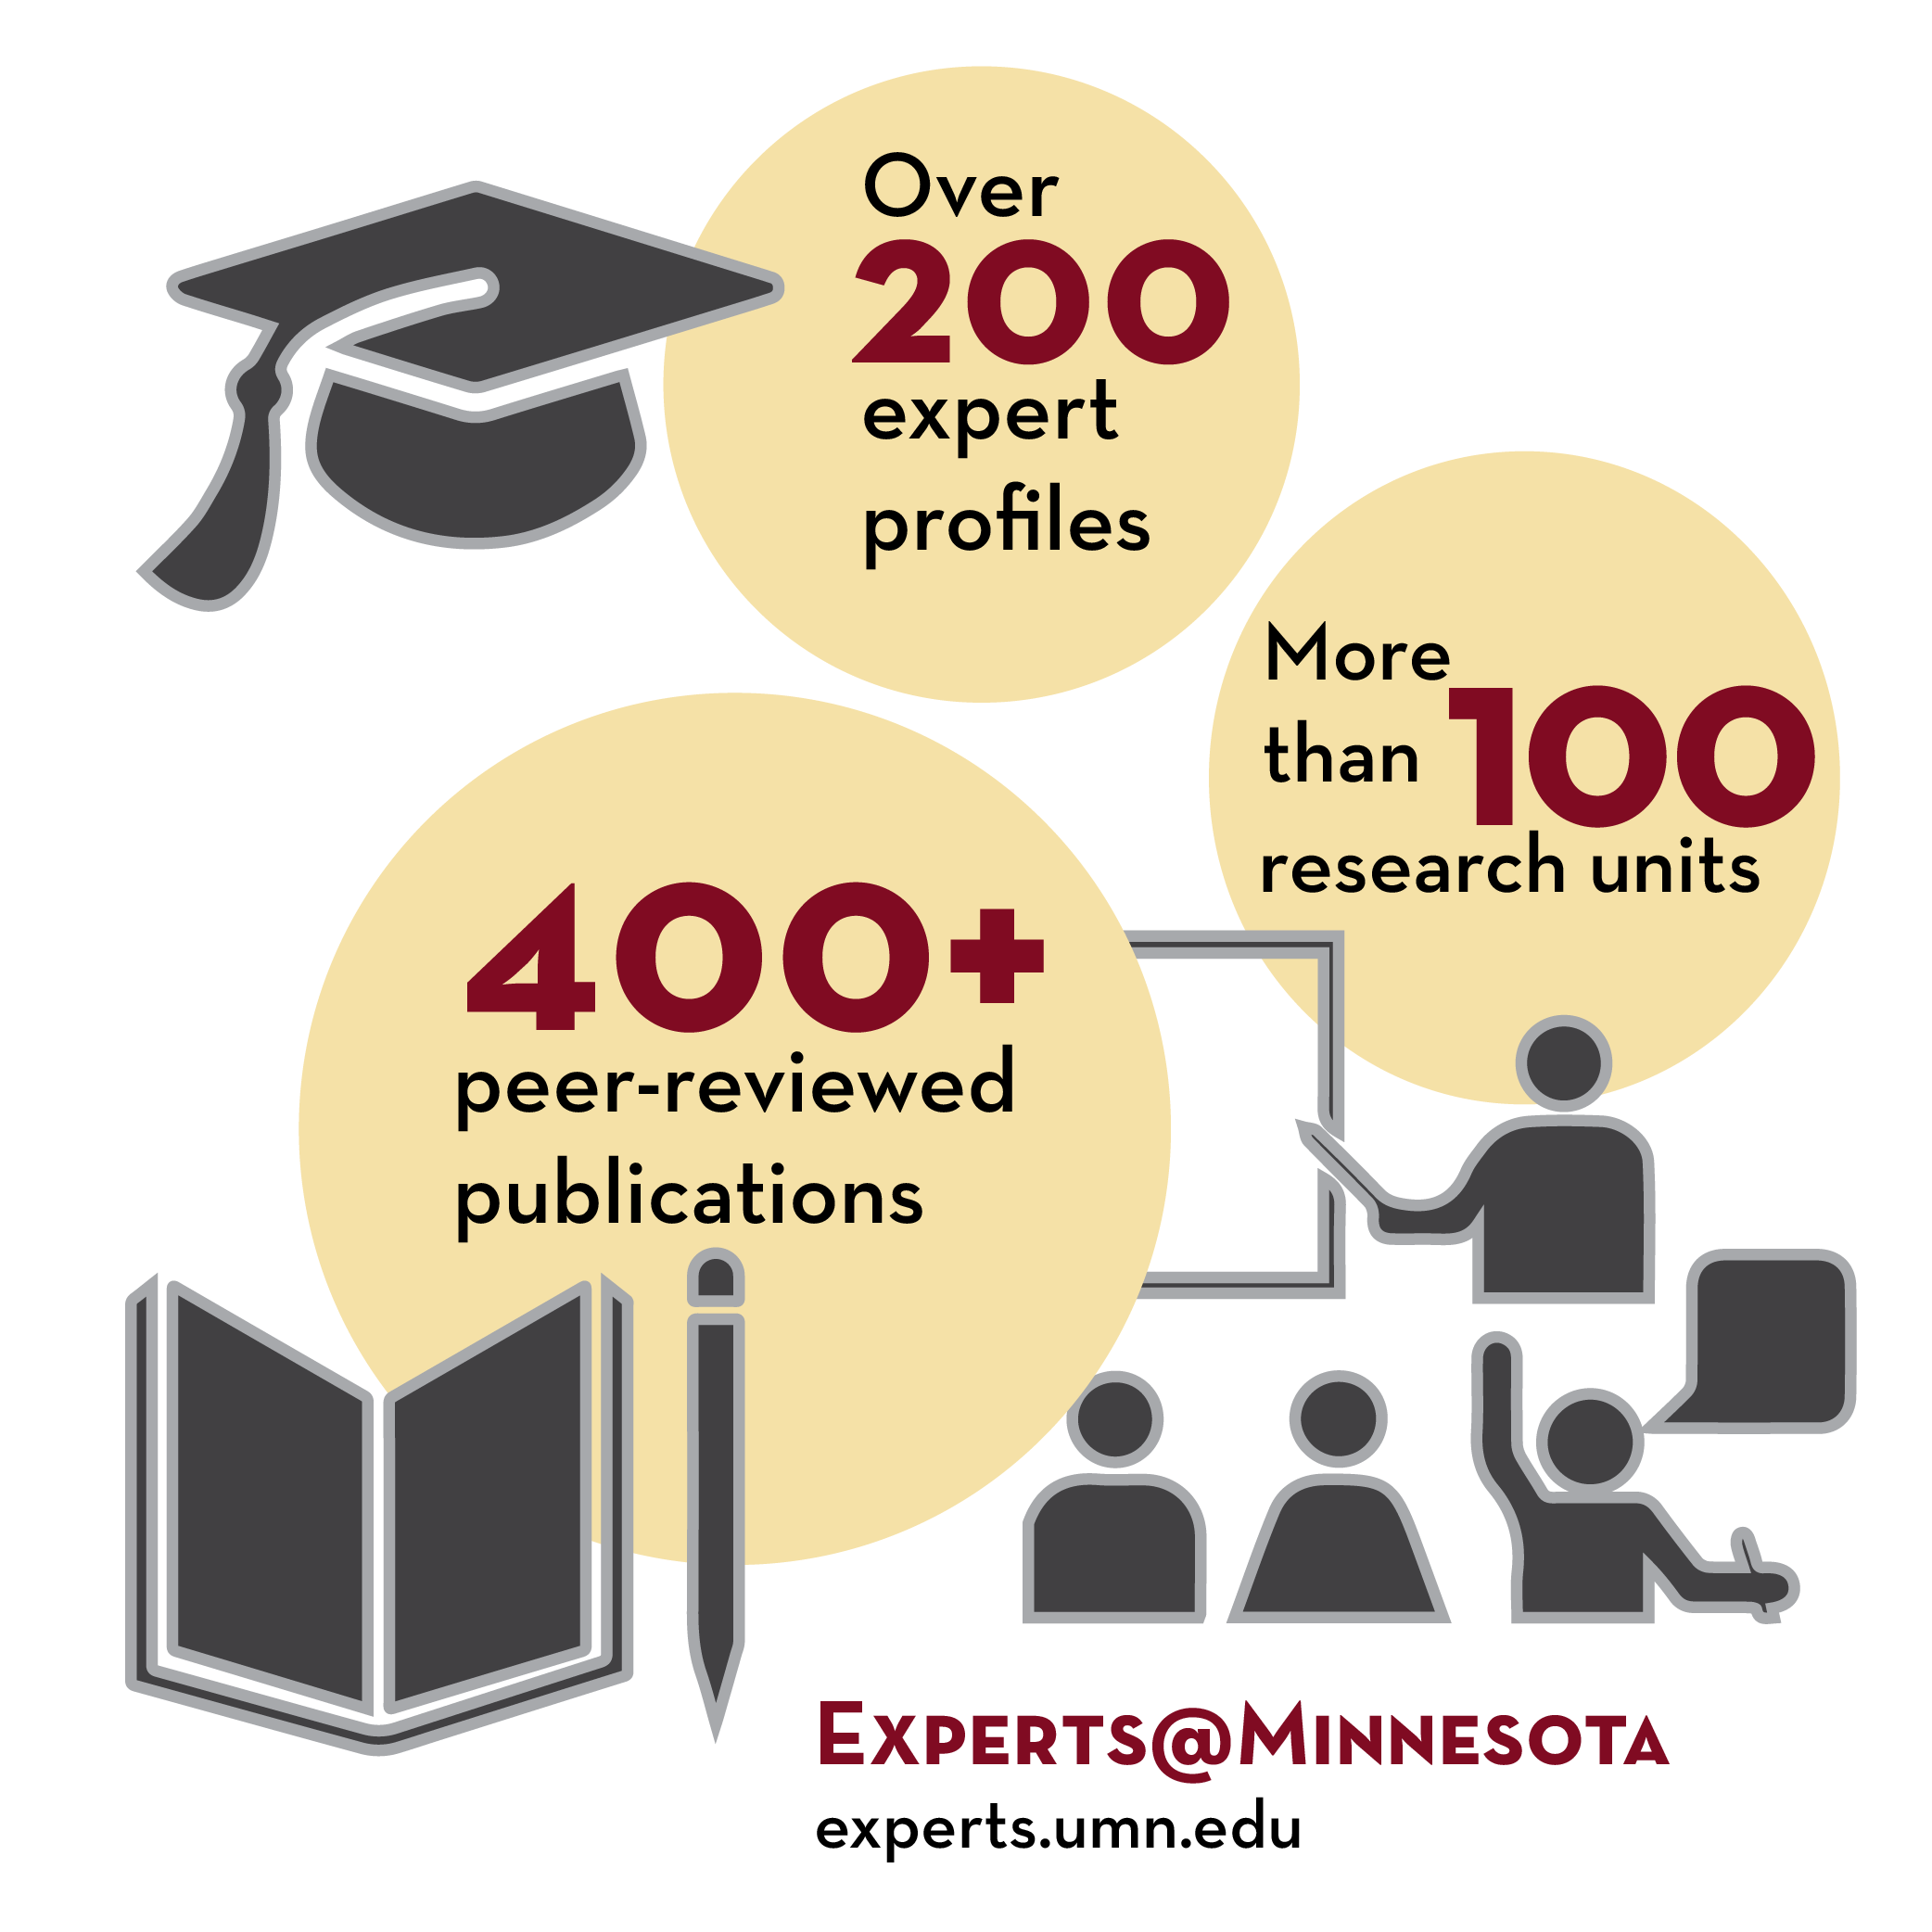 SDG 4 experts: 0ver 200 experts. more than 100 units, 400 plus publications. 